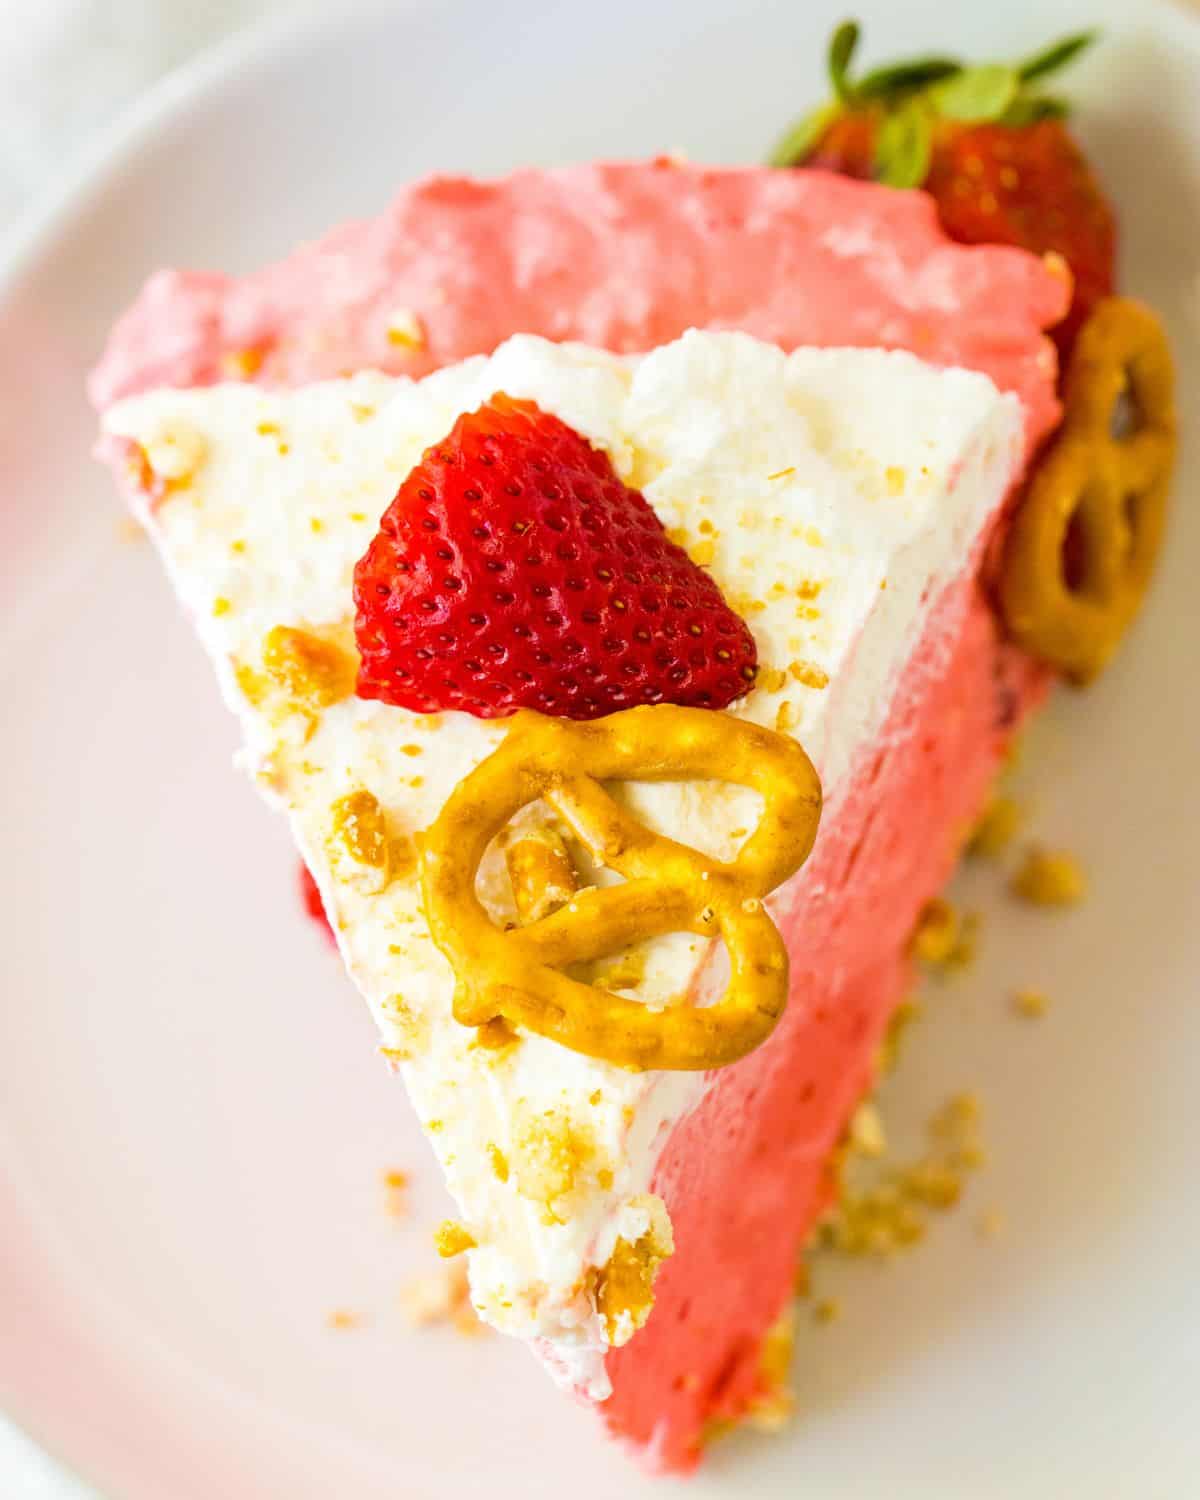 A slice of no bake strawberry pretzel pie topped with a slice of strawberry and a pretzel as garnish.